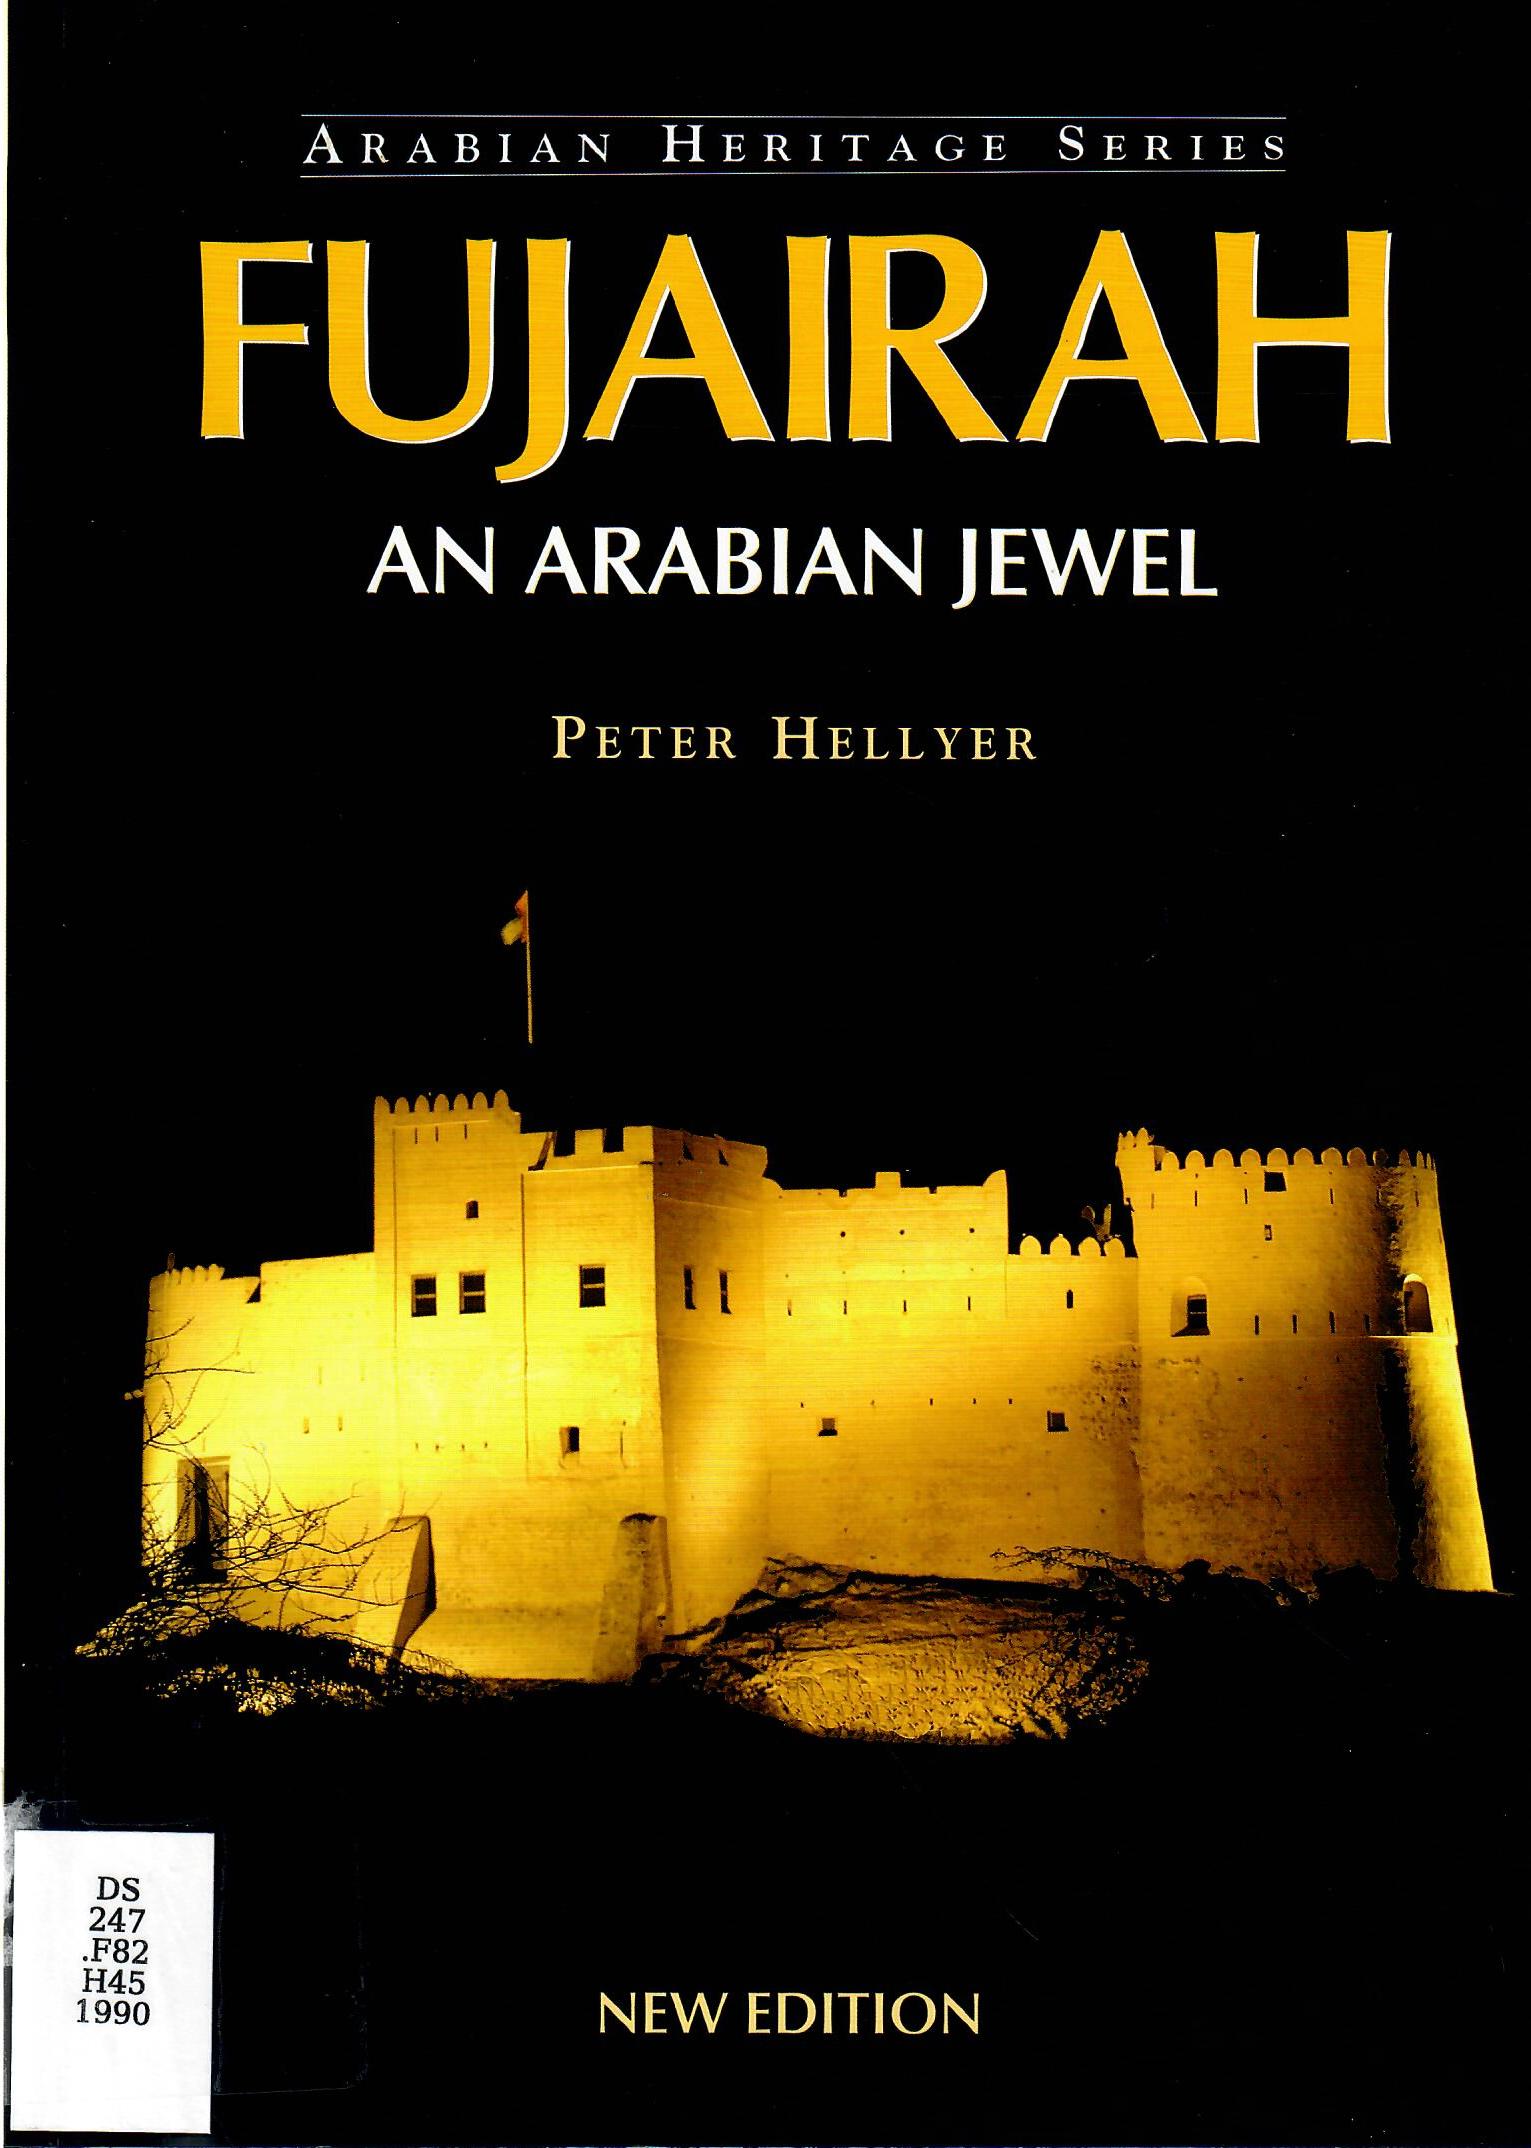 FUJAIRAH AN ARABIAN JEWEL